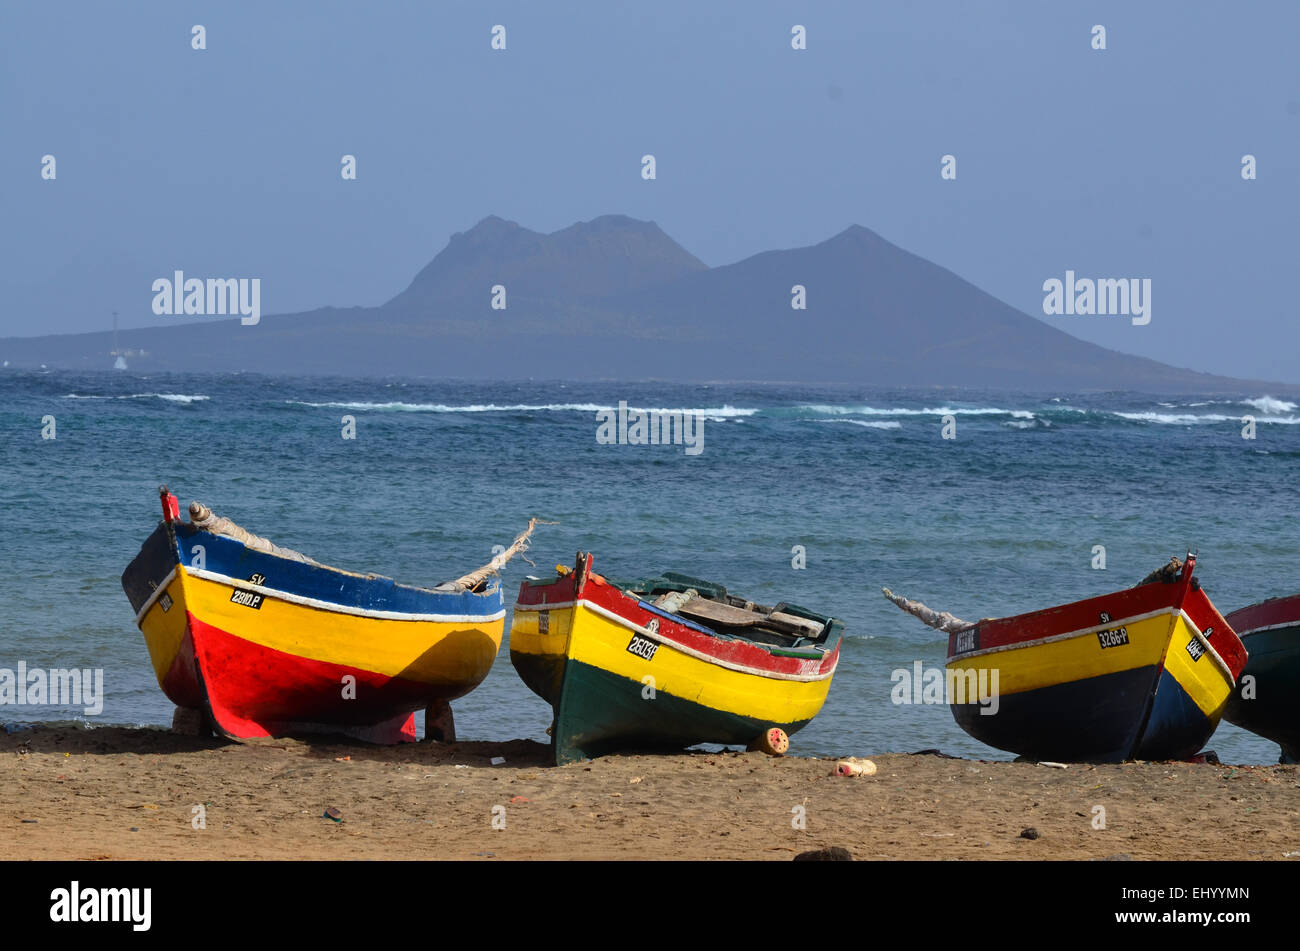 Cape Verde, Cape Verde Islands, sao vicente, coast, beach, seashore, sand beach, boots up, fishing boats, oar boats, baia gatas Stock Photo